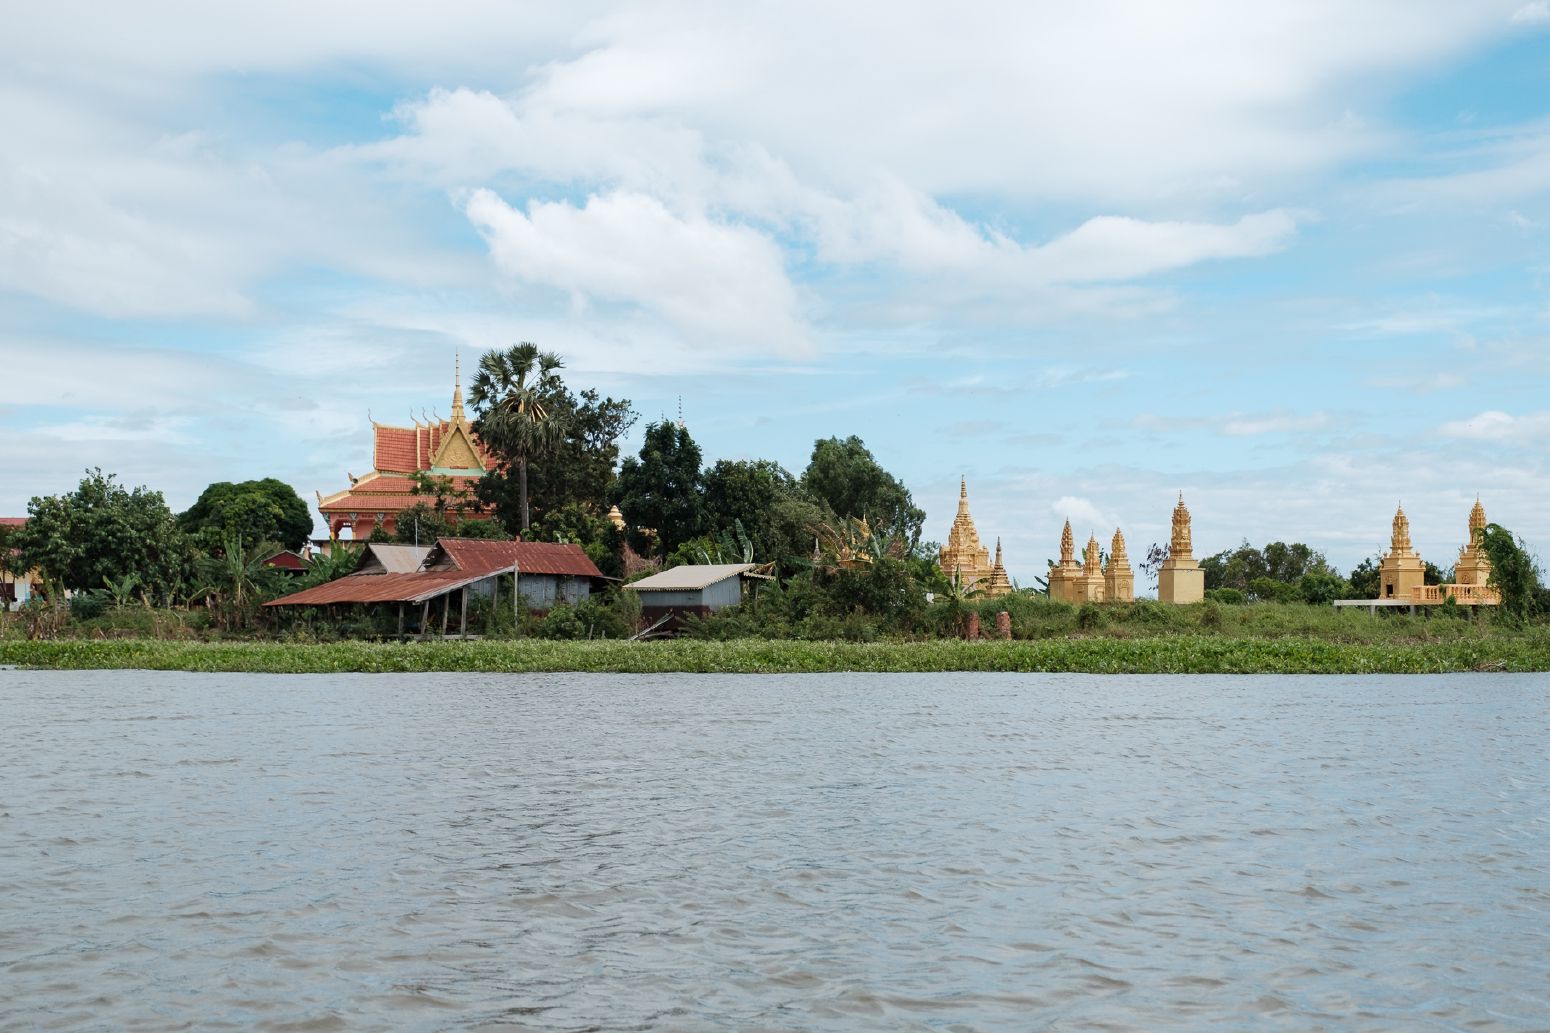 . Kompong Khleang, Tonle Sap, Siem Reap Province, Cambodia. October 2018